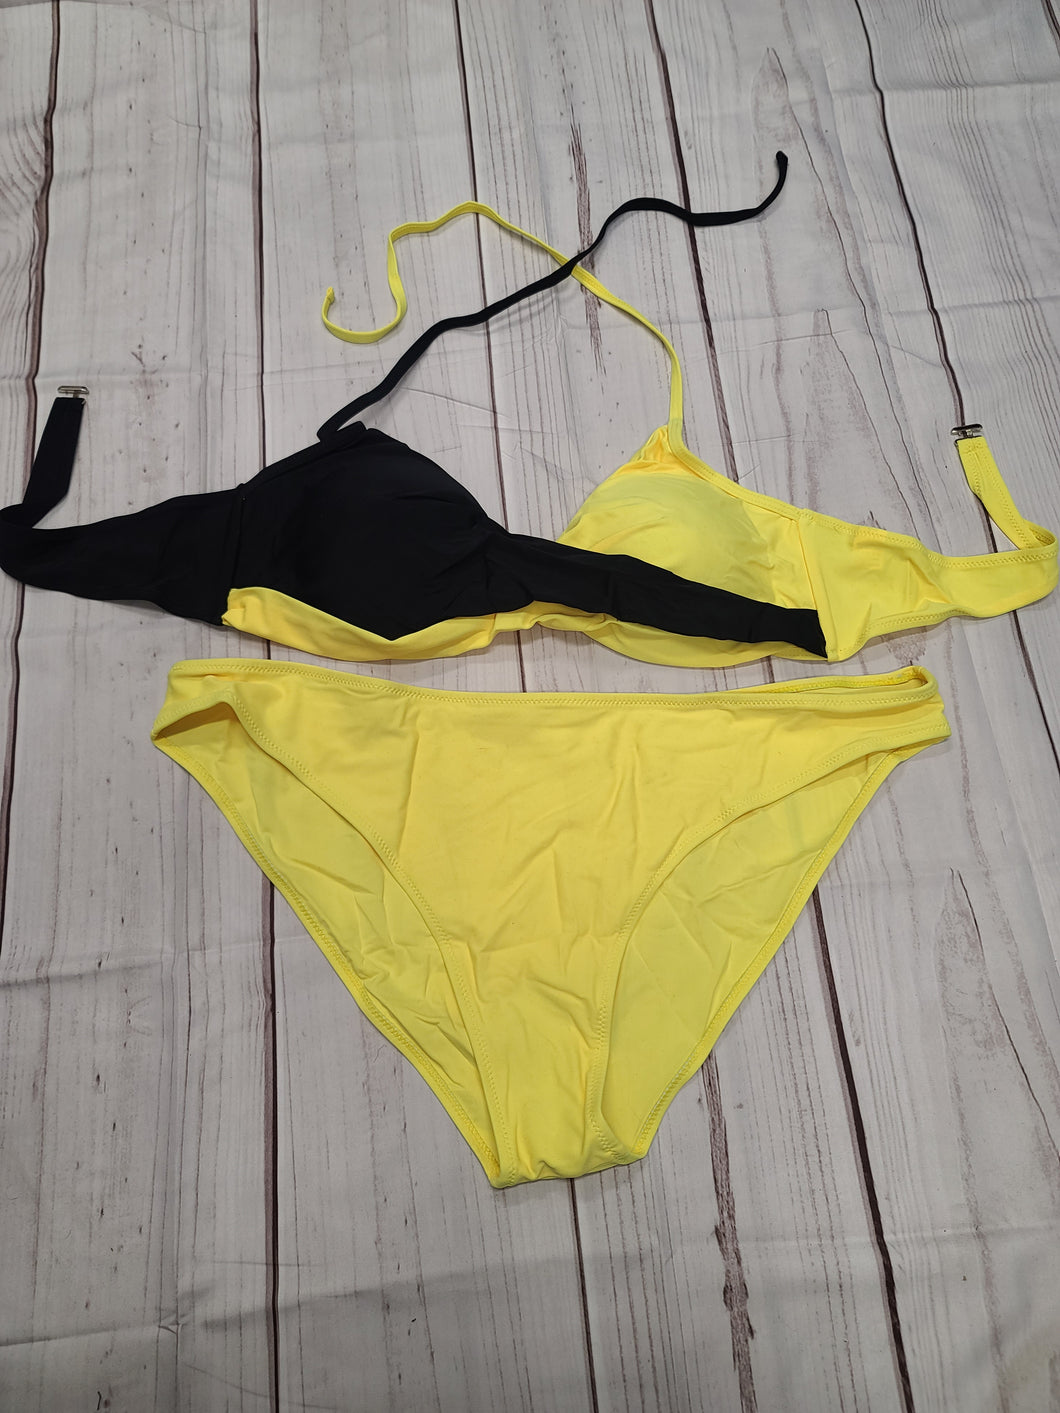 Bikini , jaune plus éclantant en vrai !